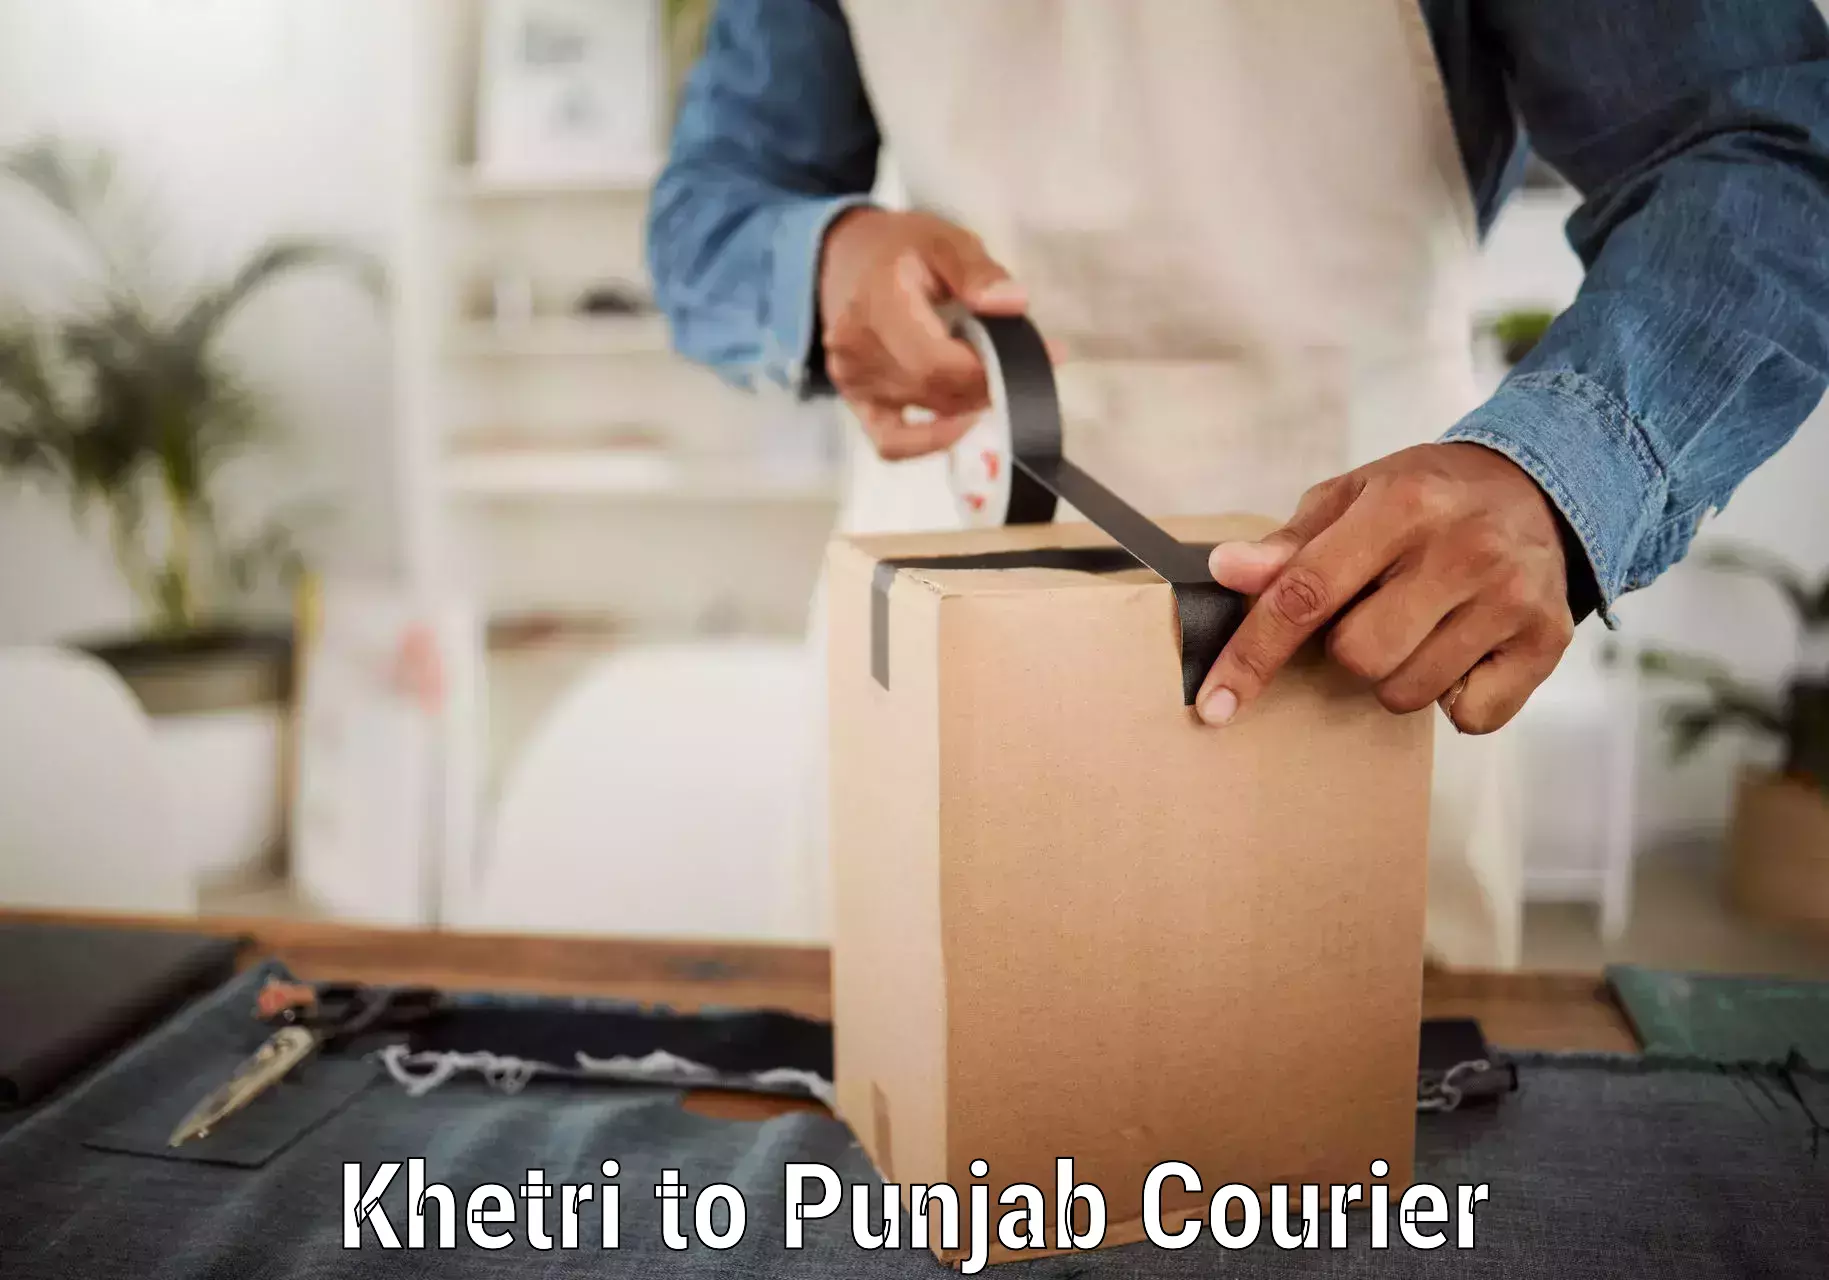 Seamless shipping experience Khetri to Punjab